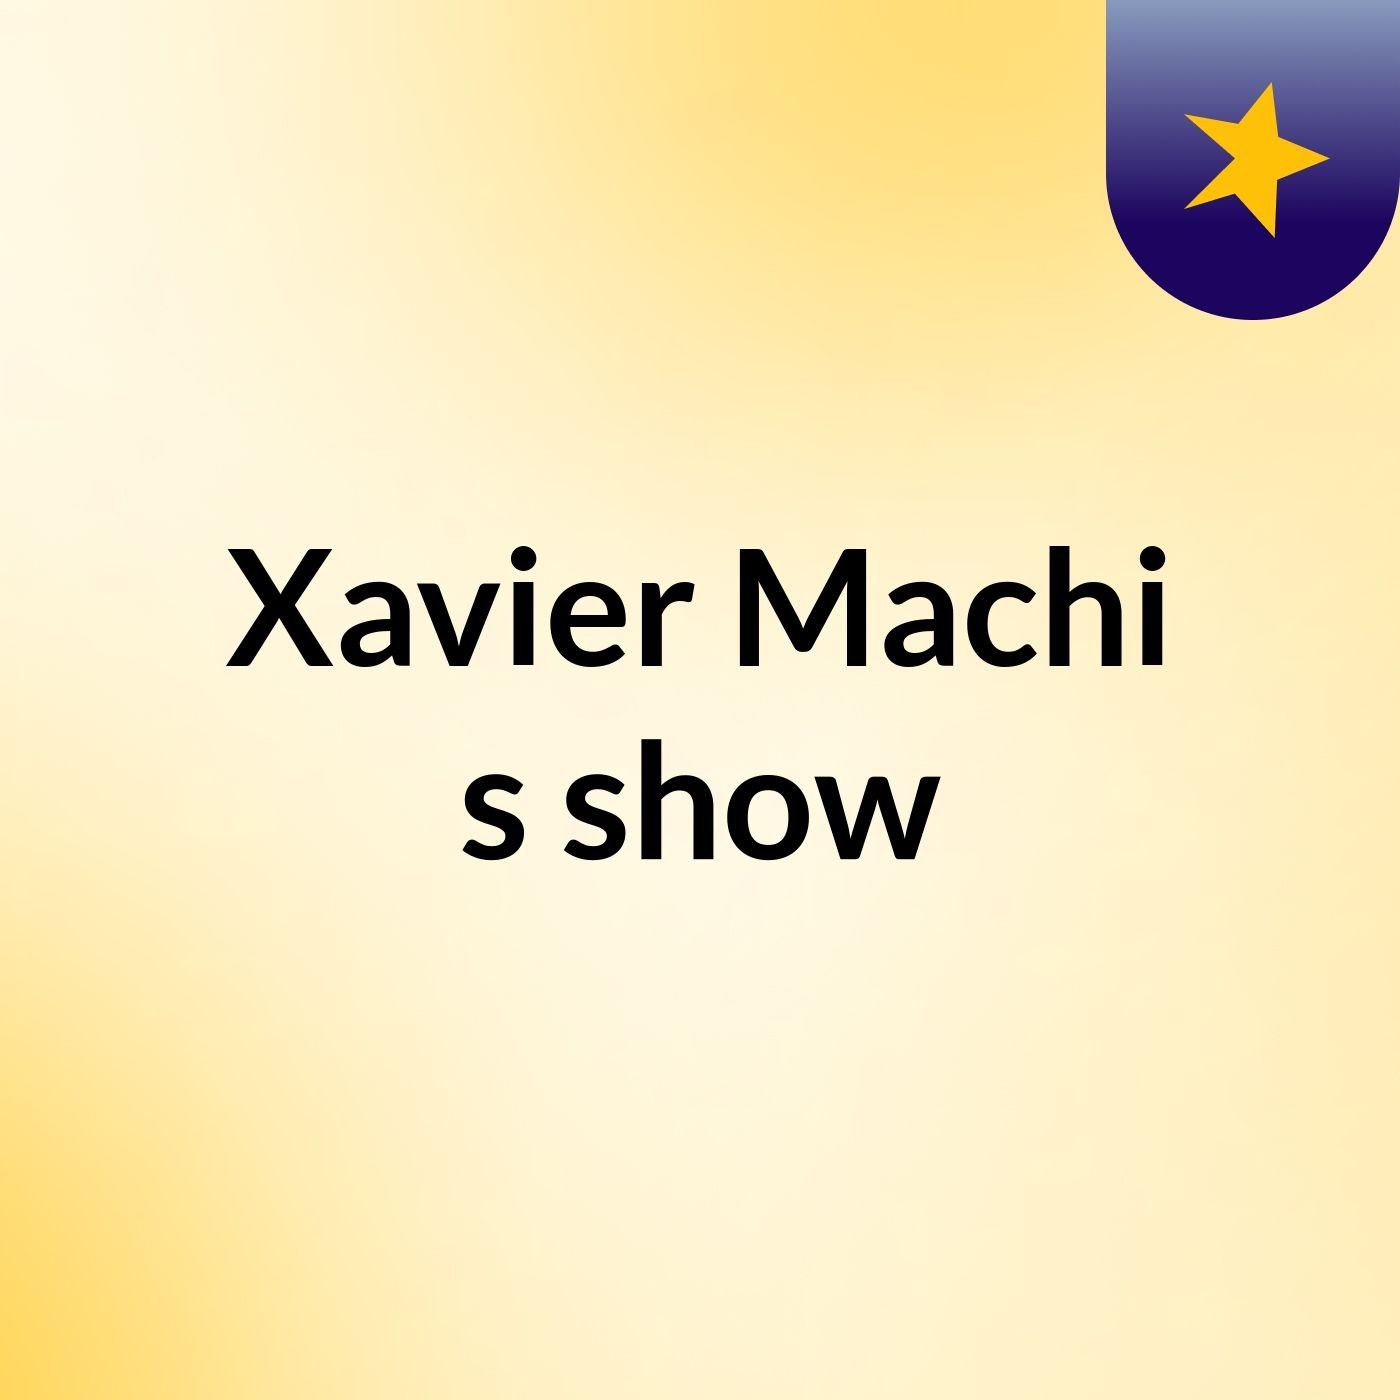 Xavier Machi's show